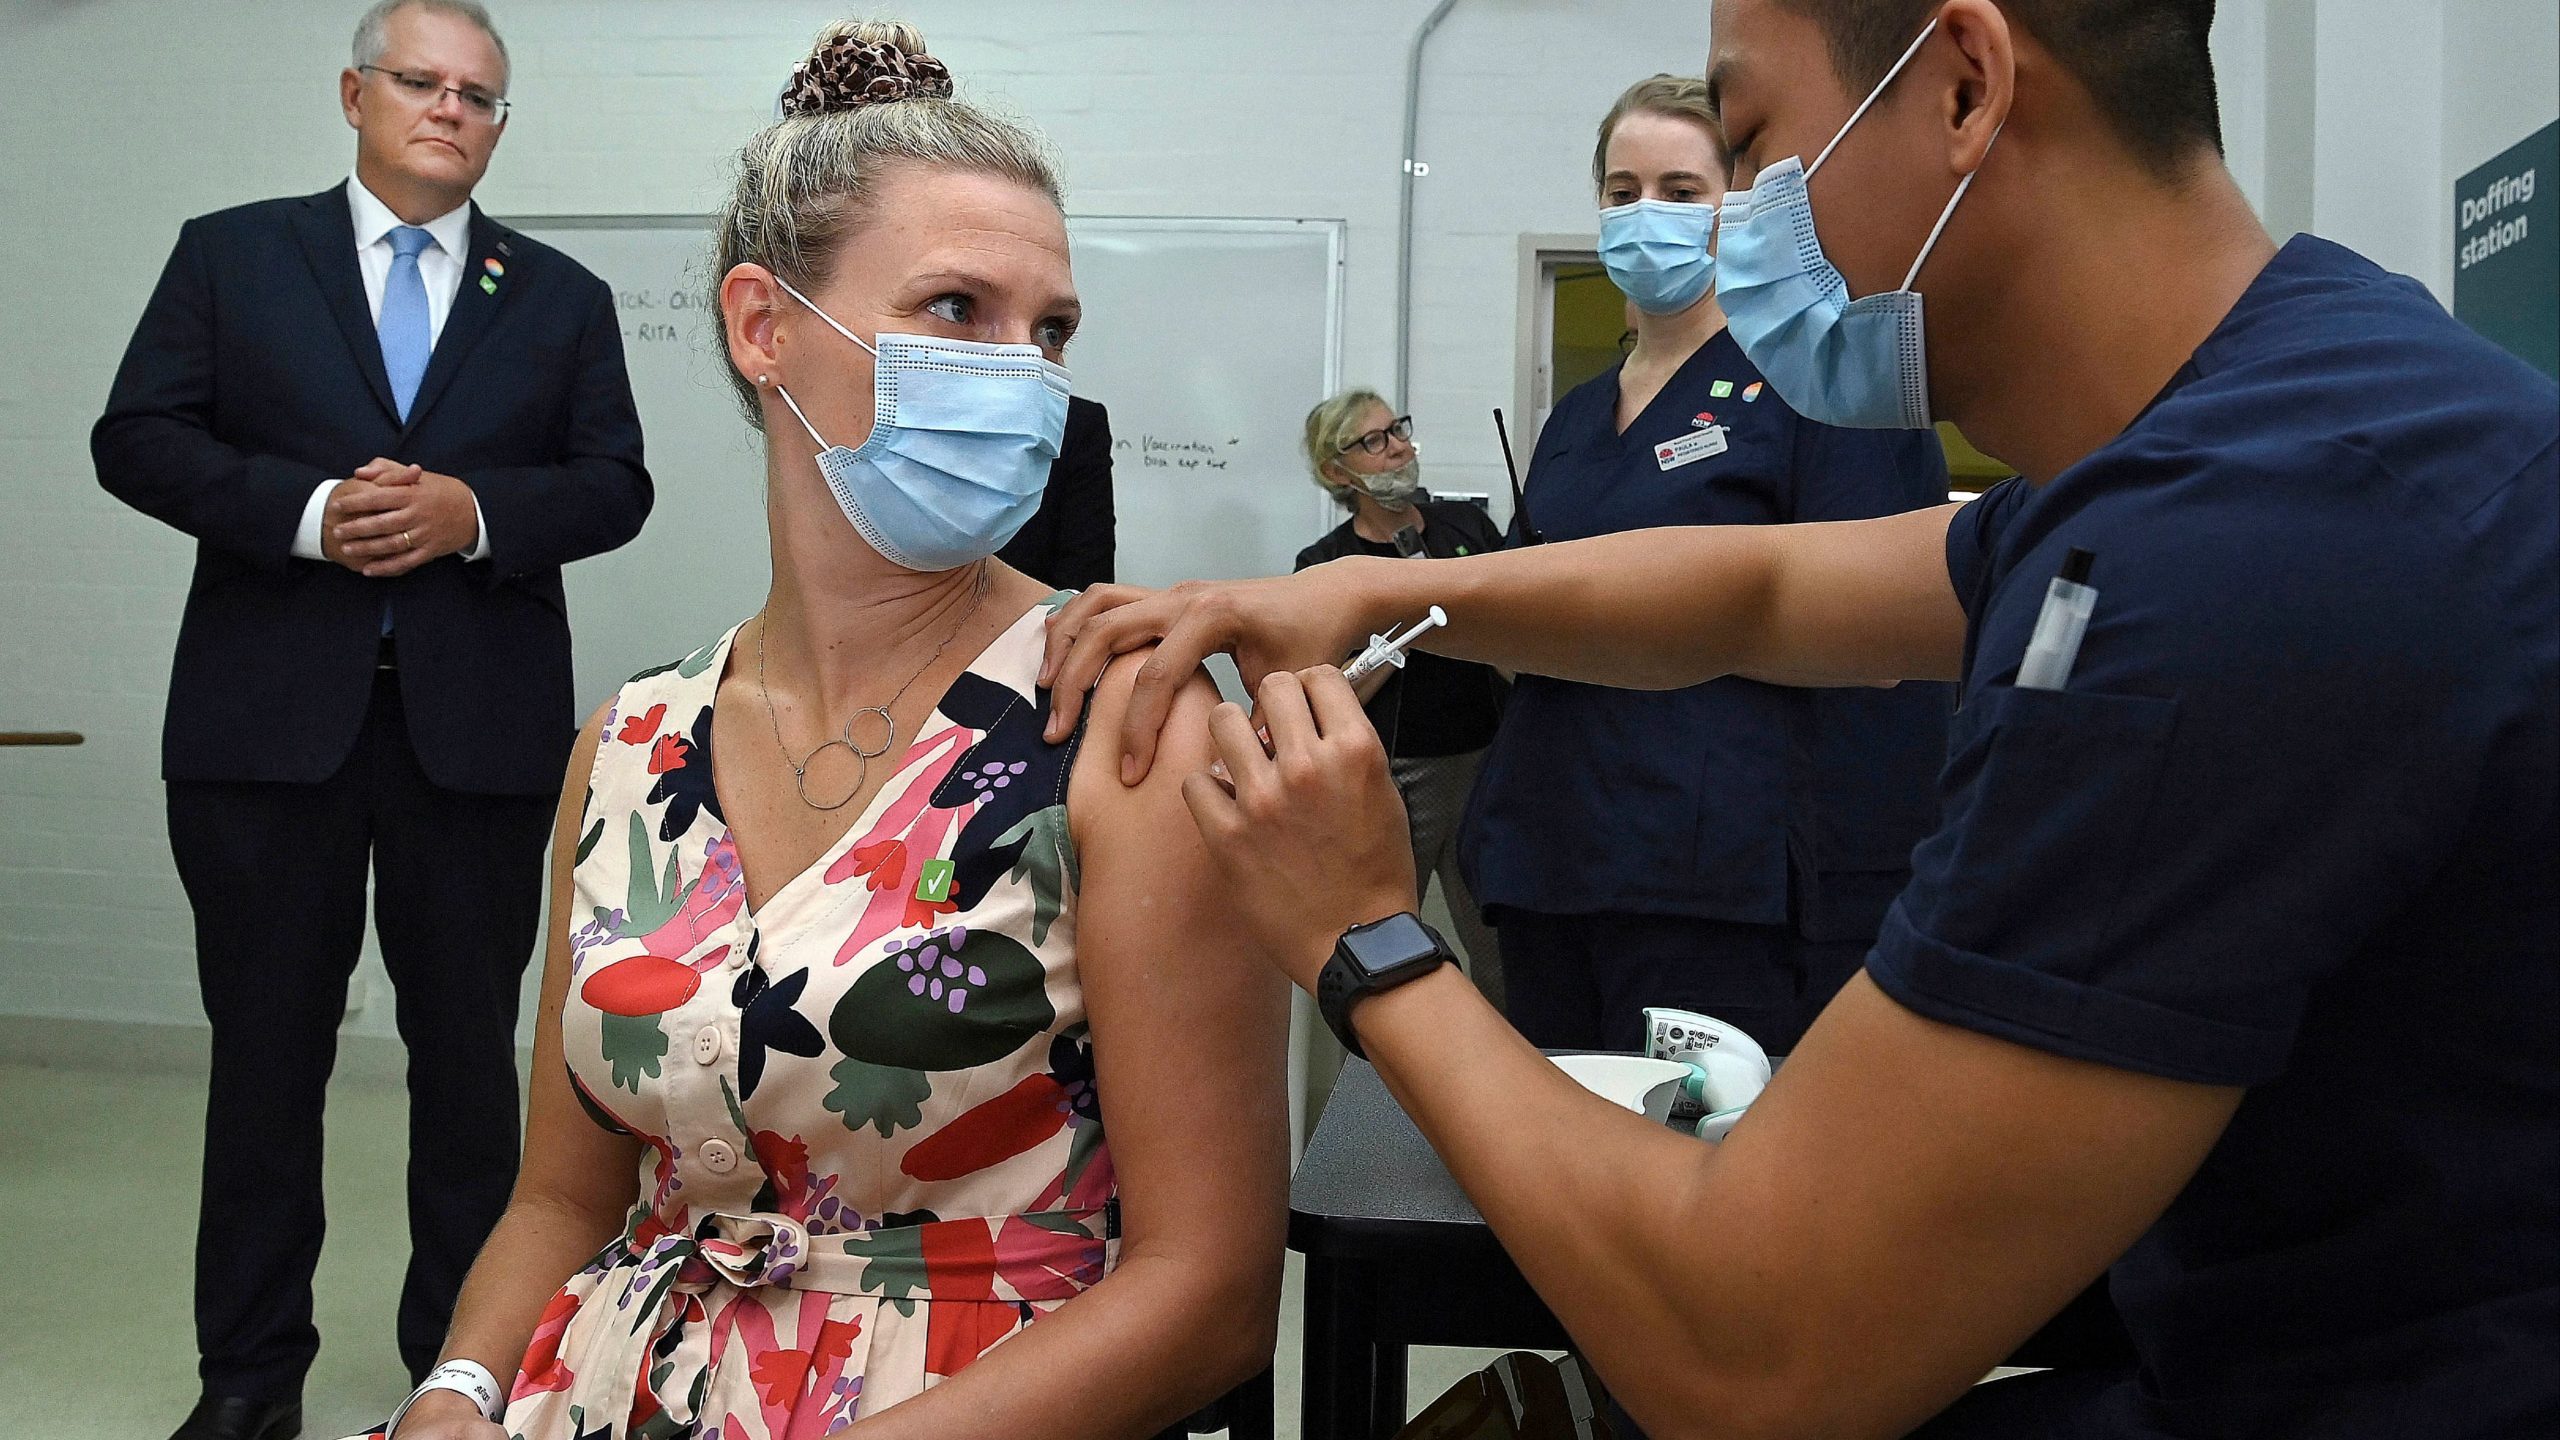 New restrictions as coronavirus cases spread across Australia